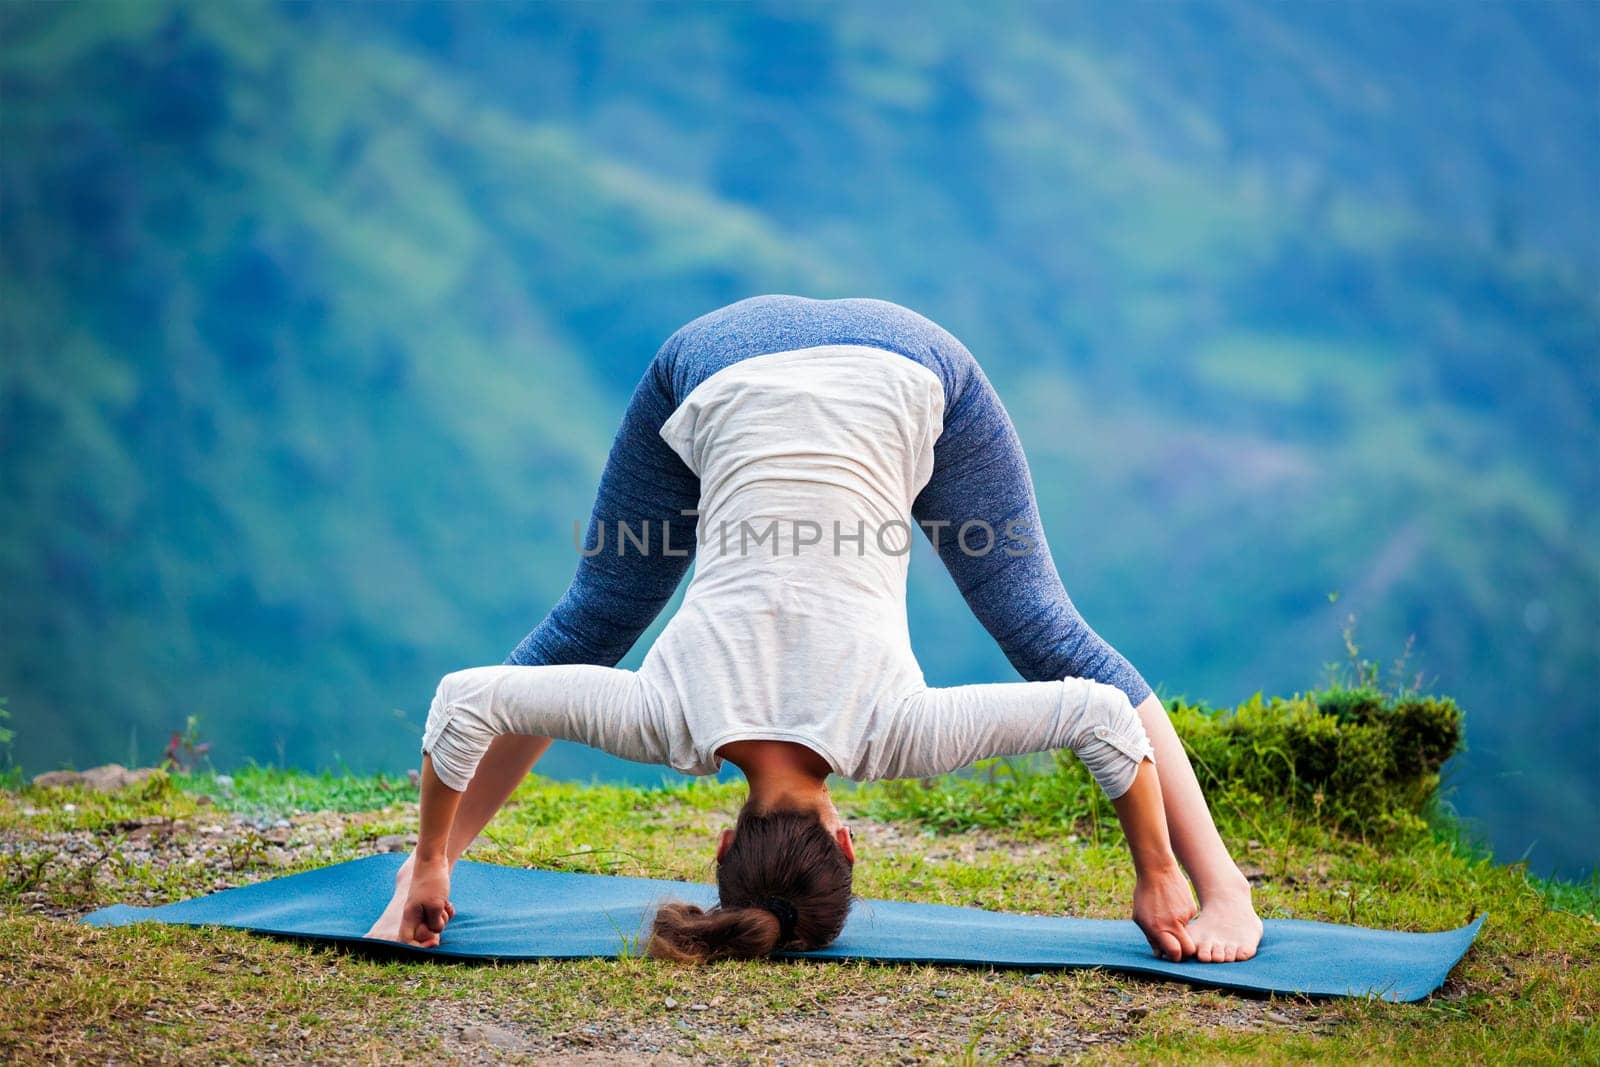 Woman doing Ashtanga Vinyasa Yoga asana Prasarita padottanasana by dimol